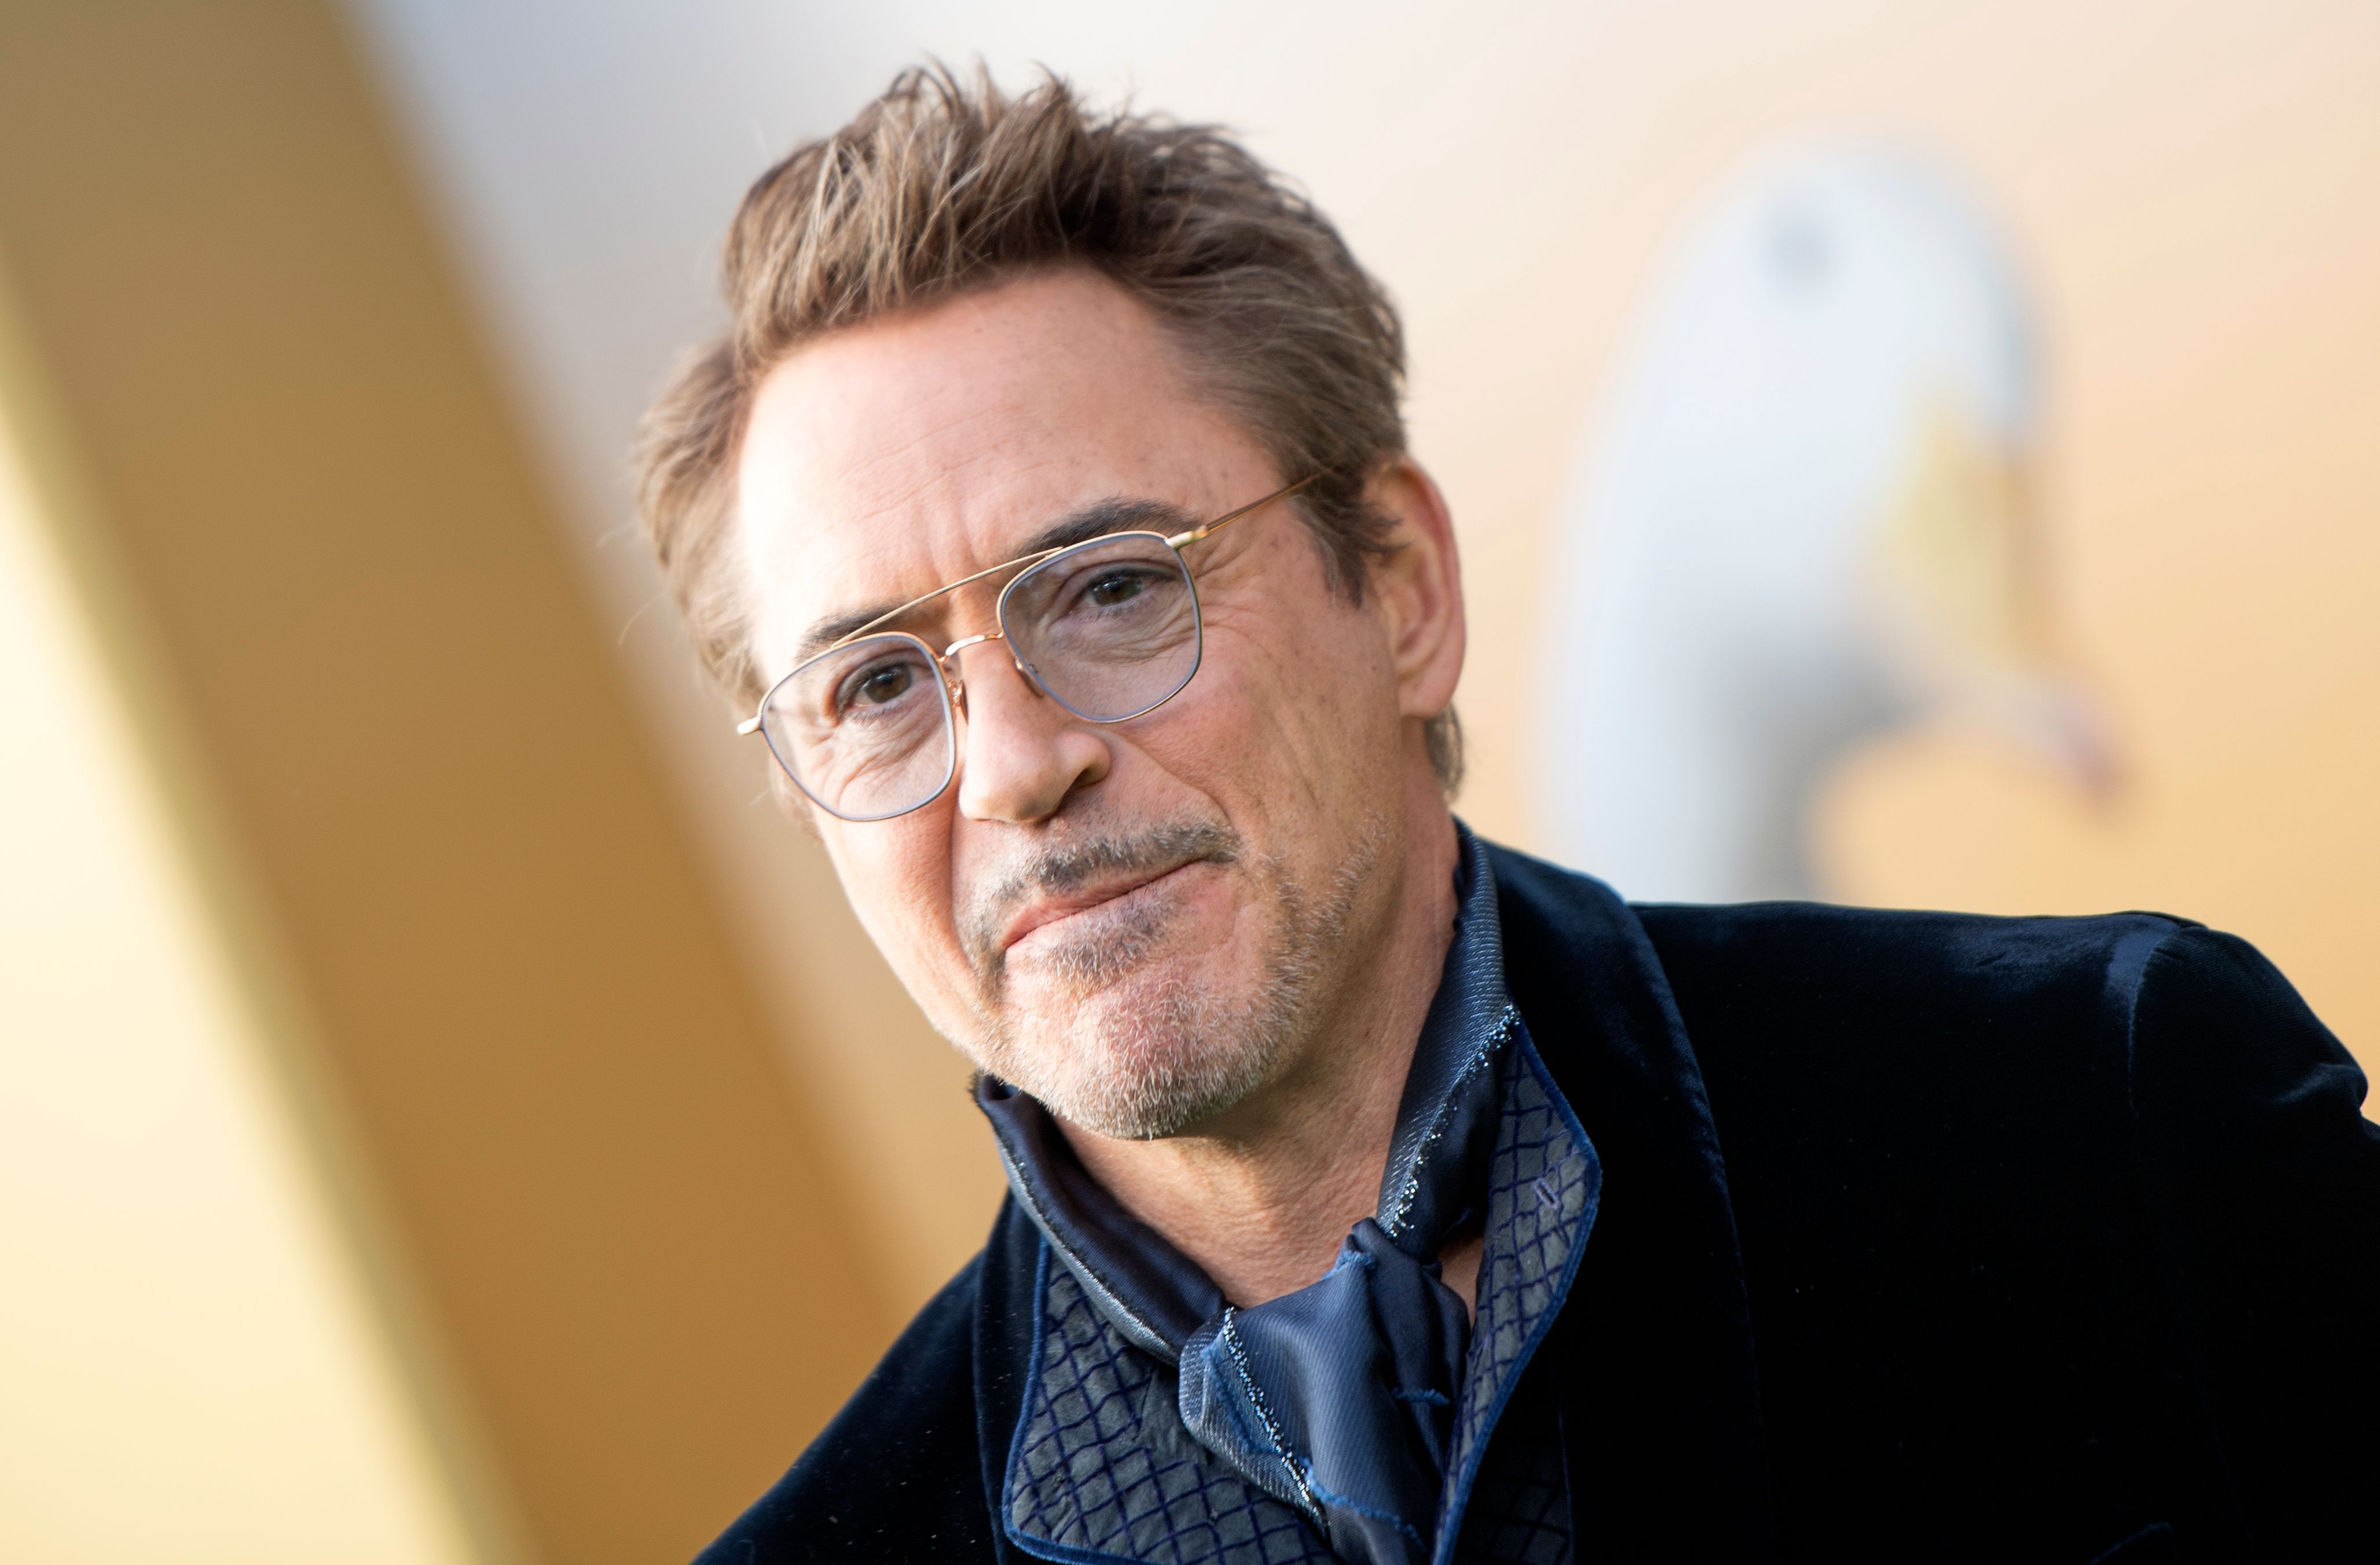 Marvel star Robert Downey Jr unveils dramatic hair transformation